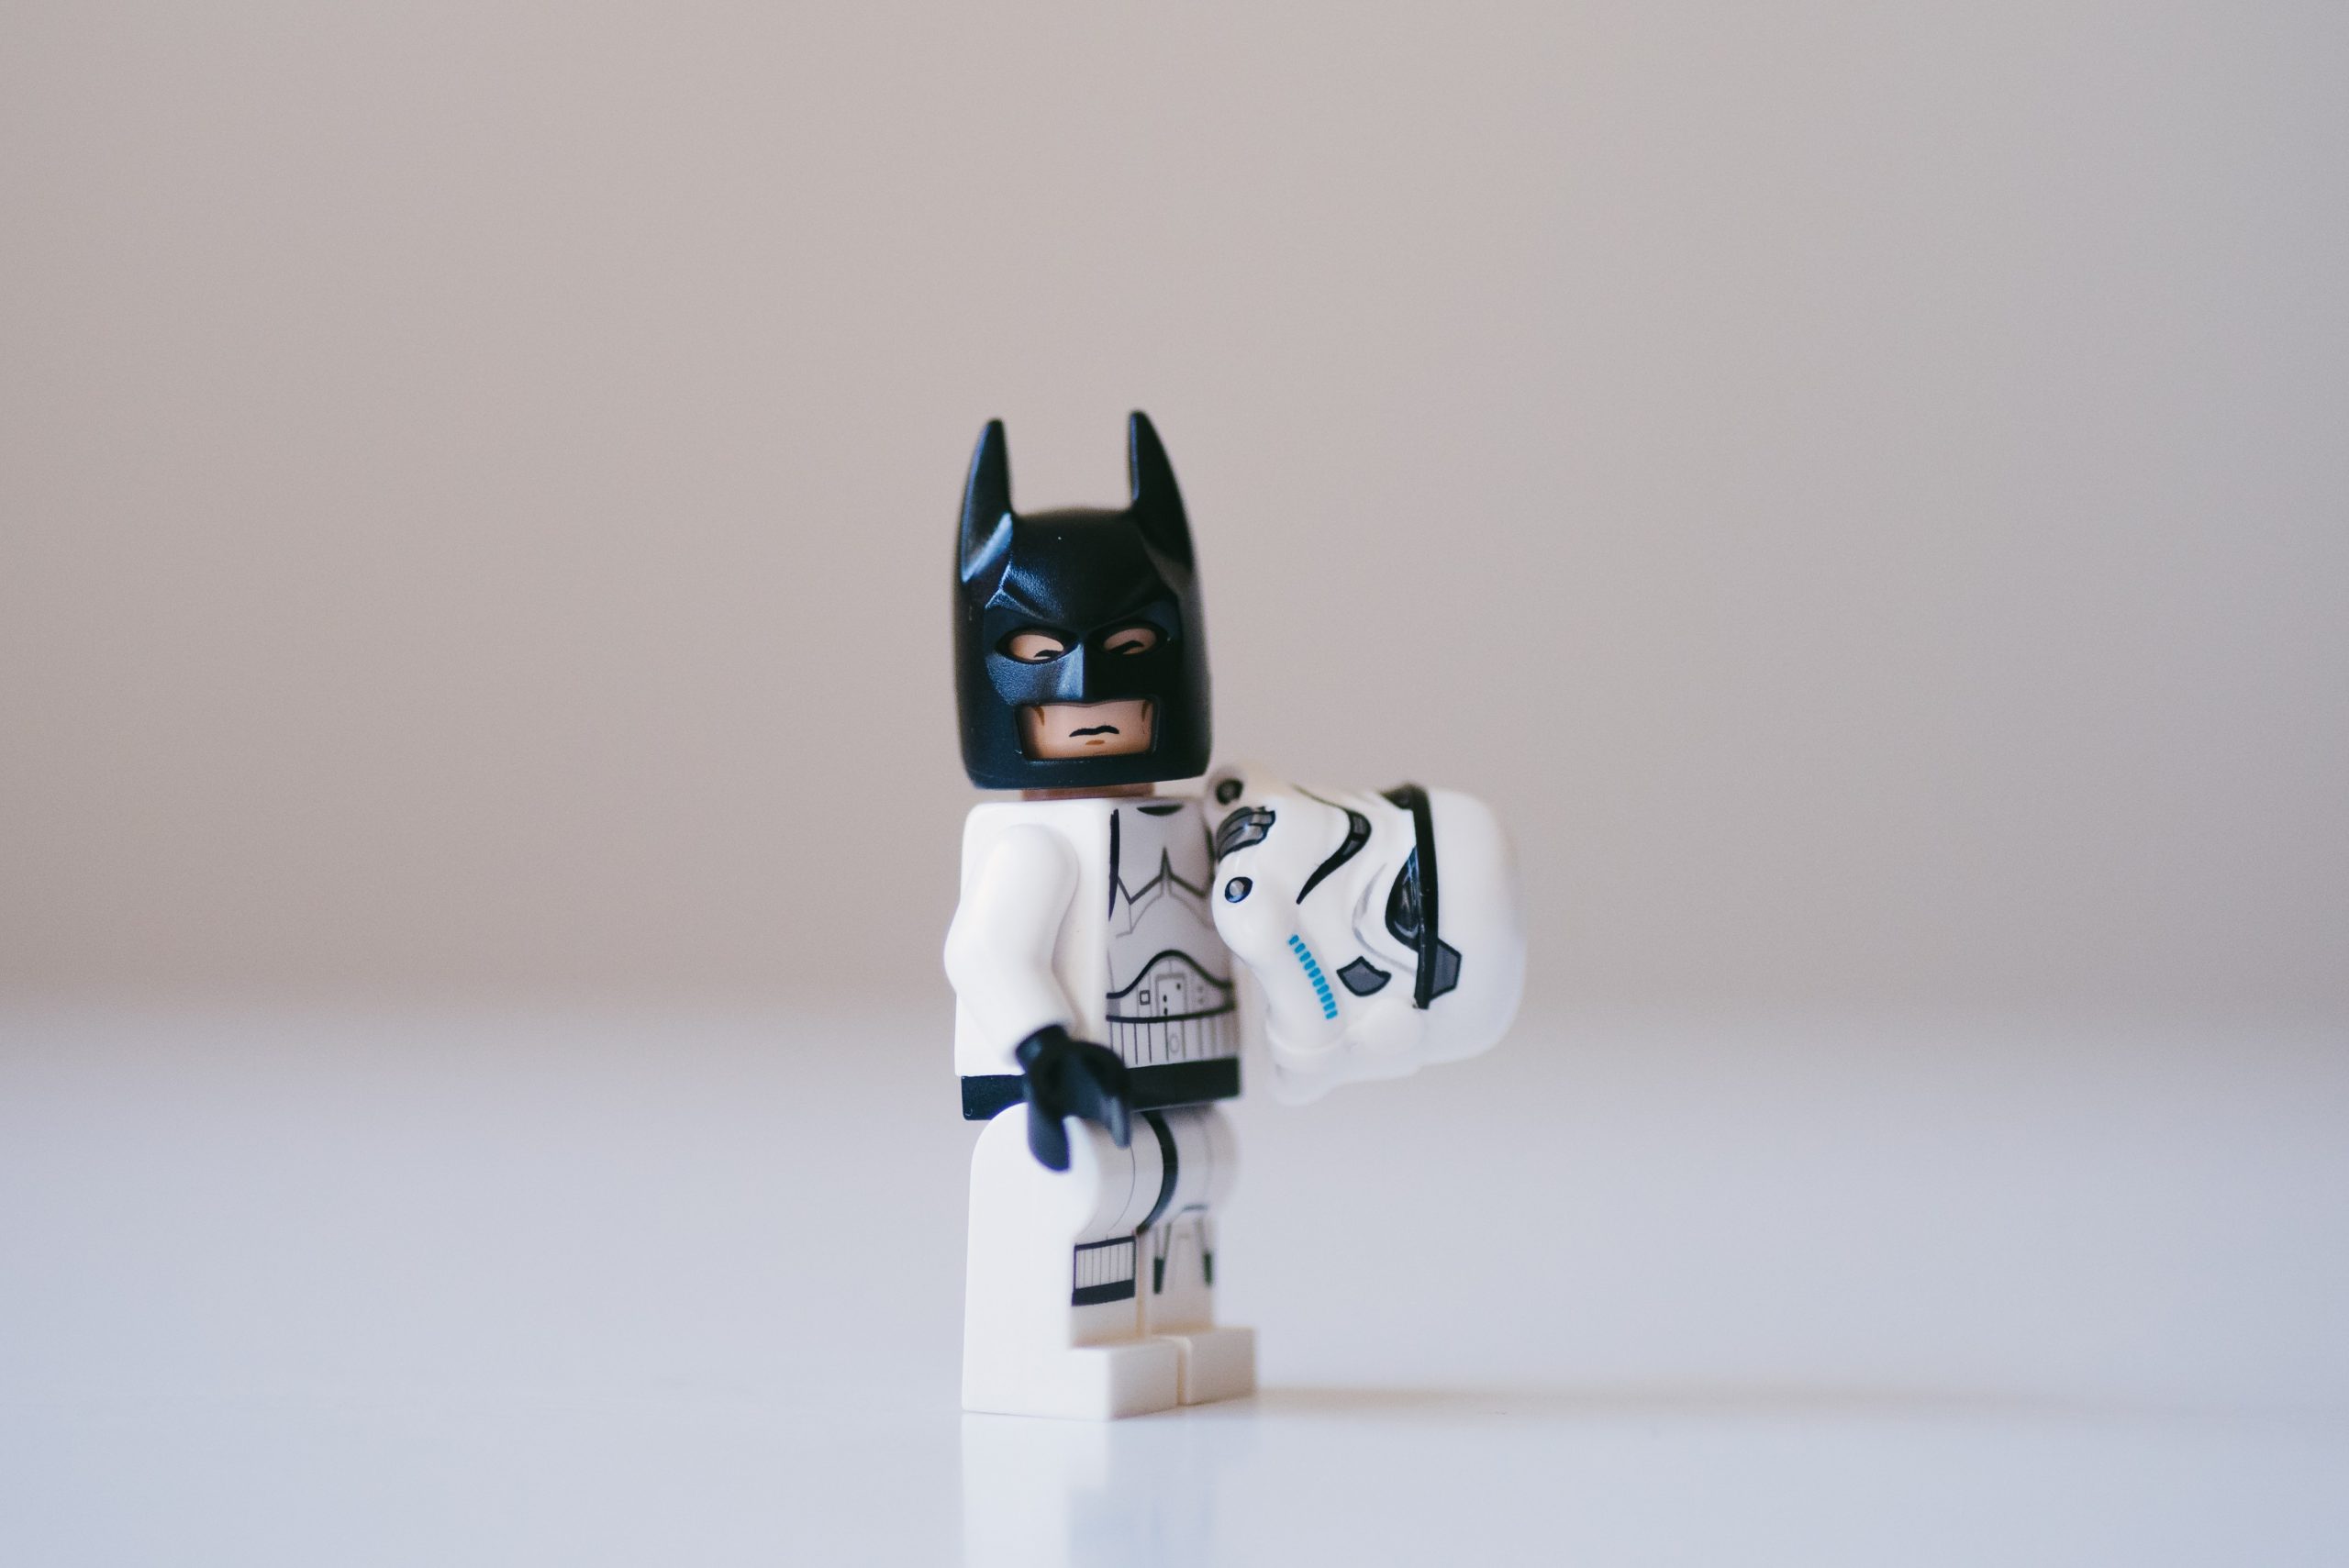 Lego Batman is dressed as a Stormtrooper